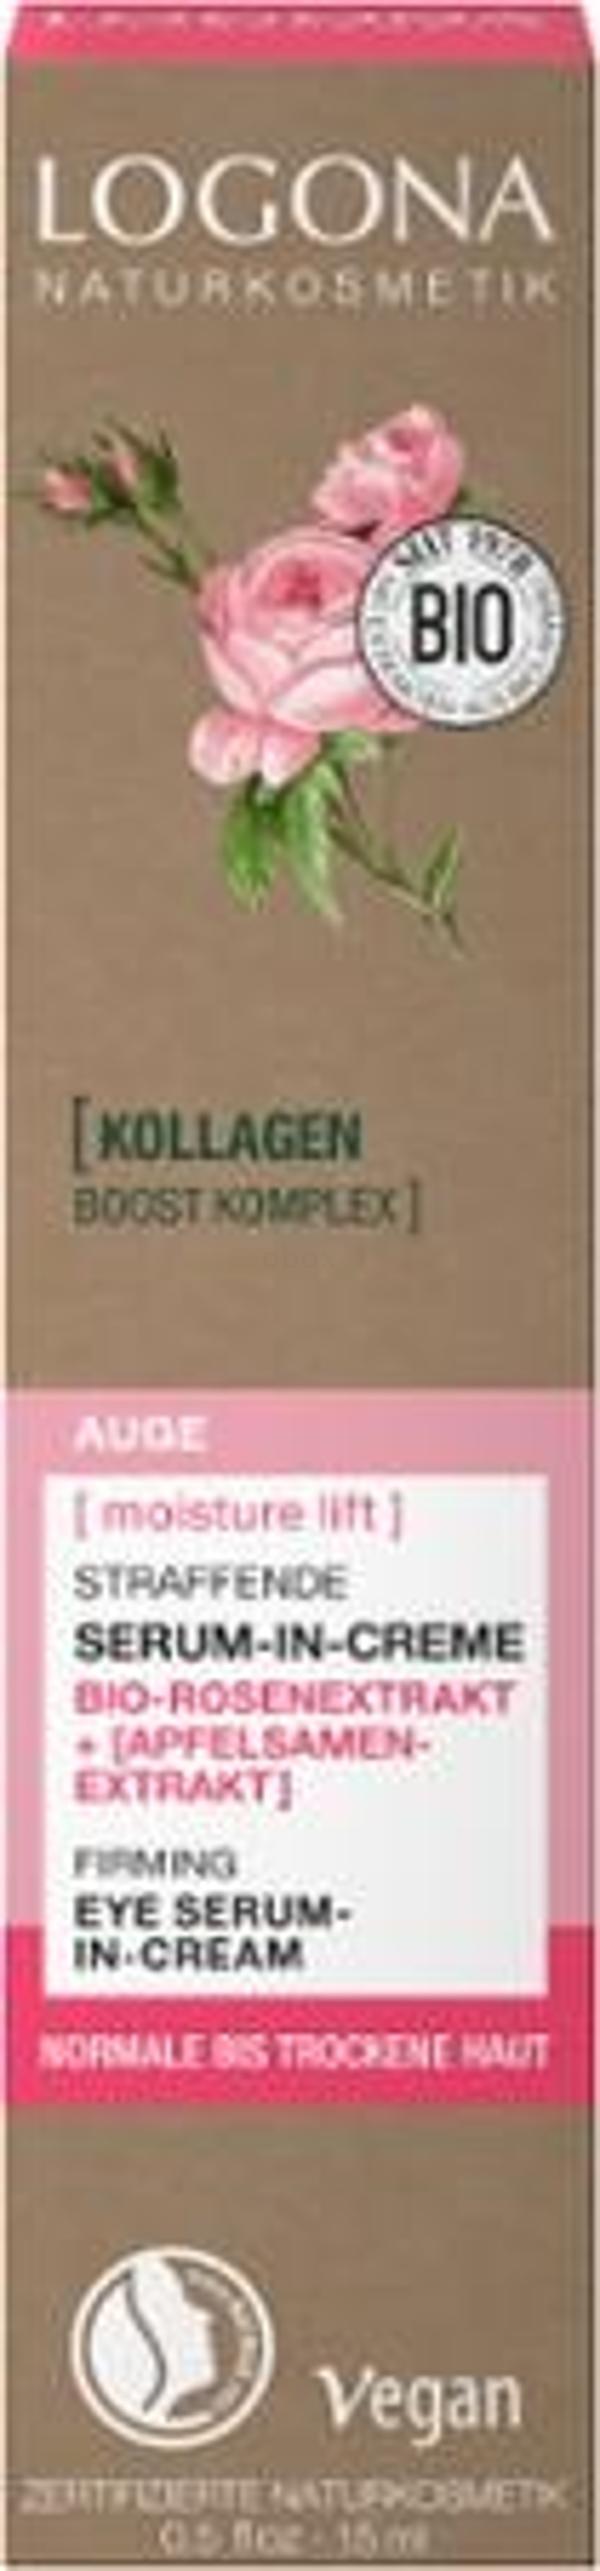 Produktfoto zu MOISTURE LIFT Serum-in-Creme Rose & Apfel 15ml